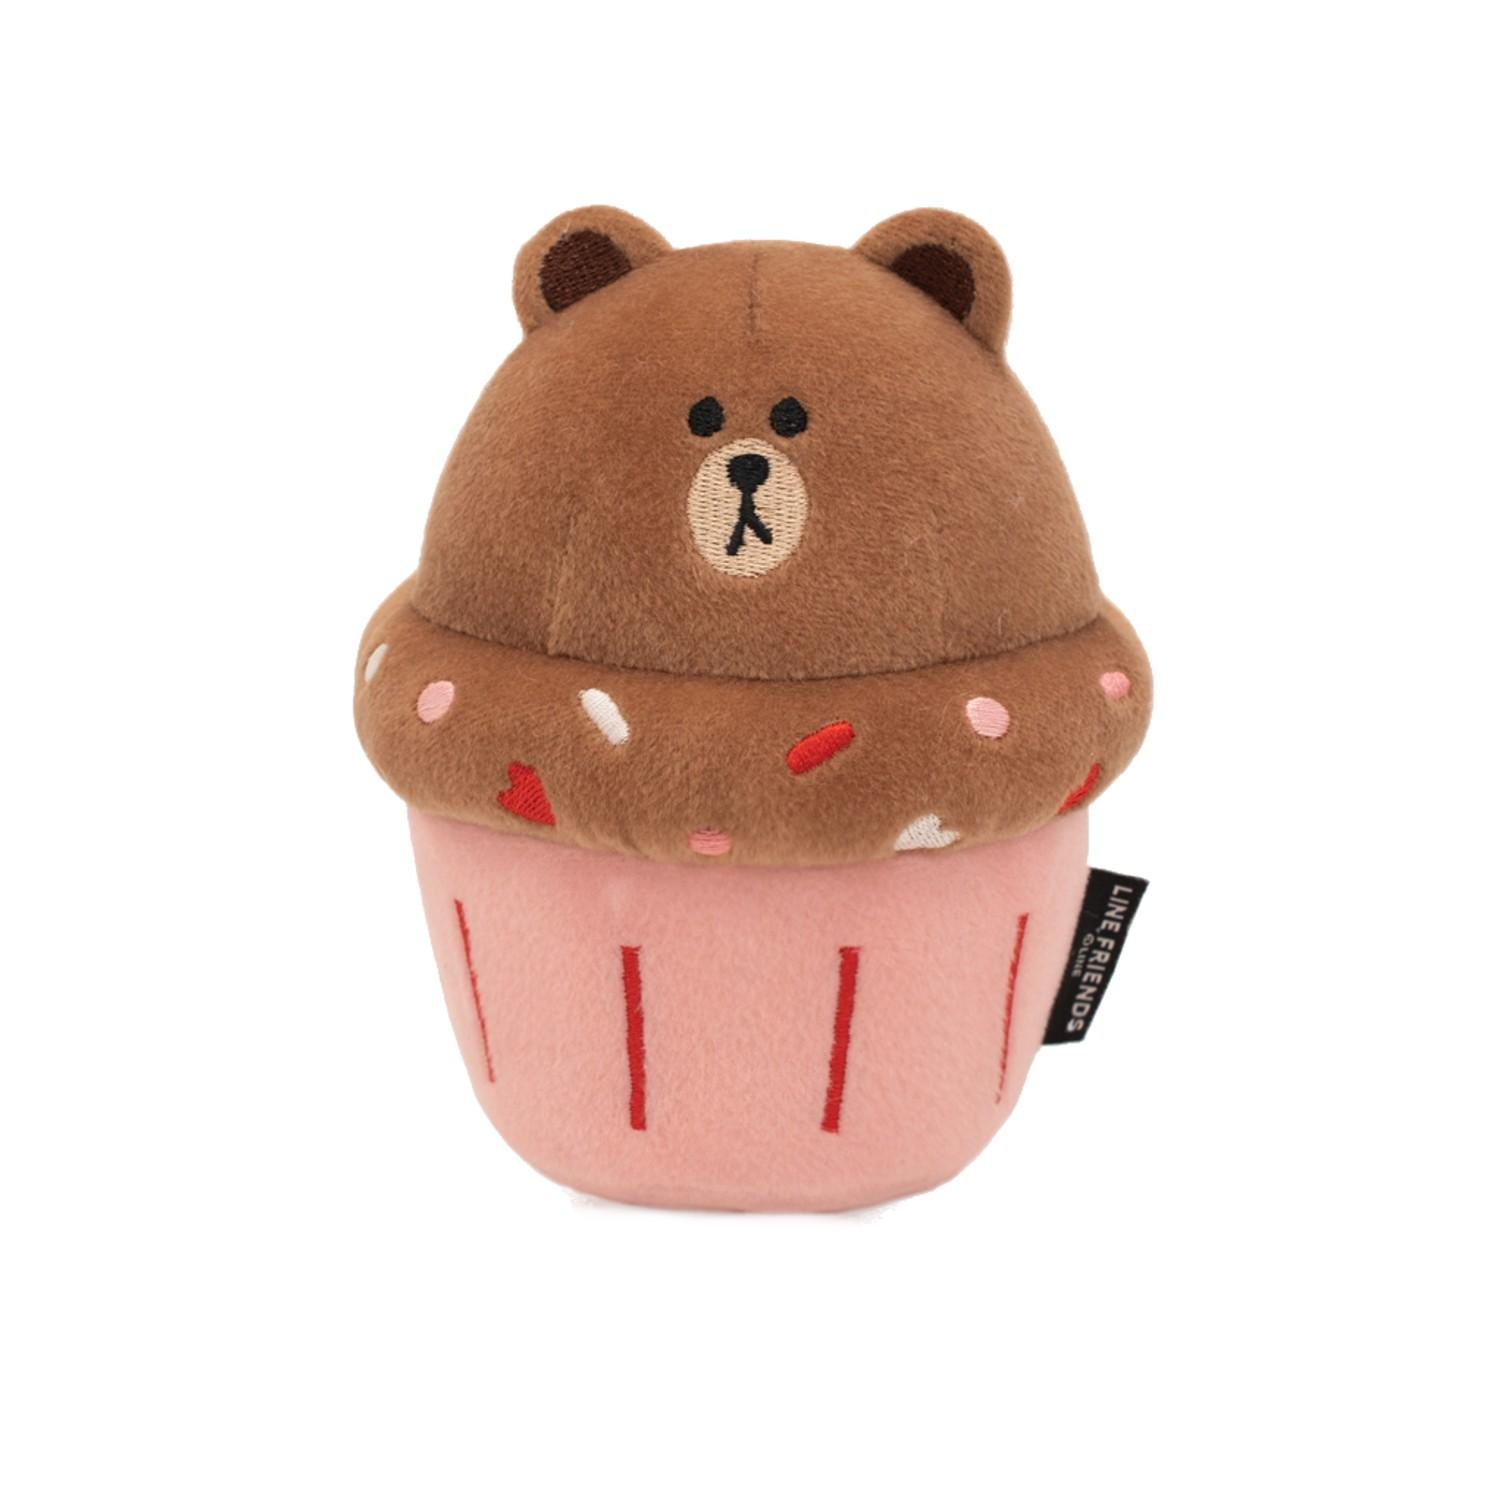 ZippyPaws Line Friends NomNomz Cupcake Dog Toy - Brown Bear